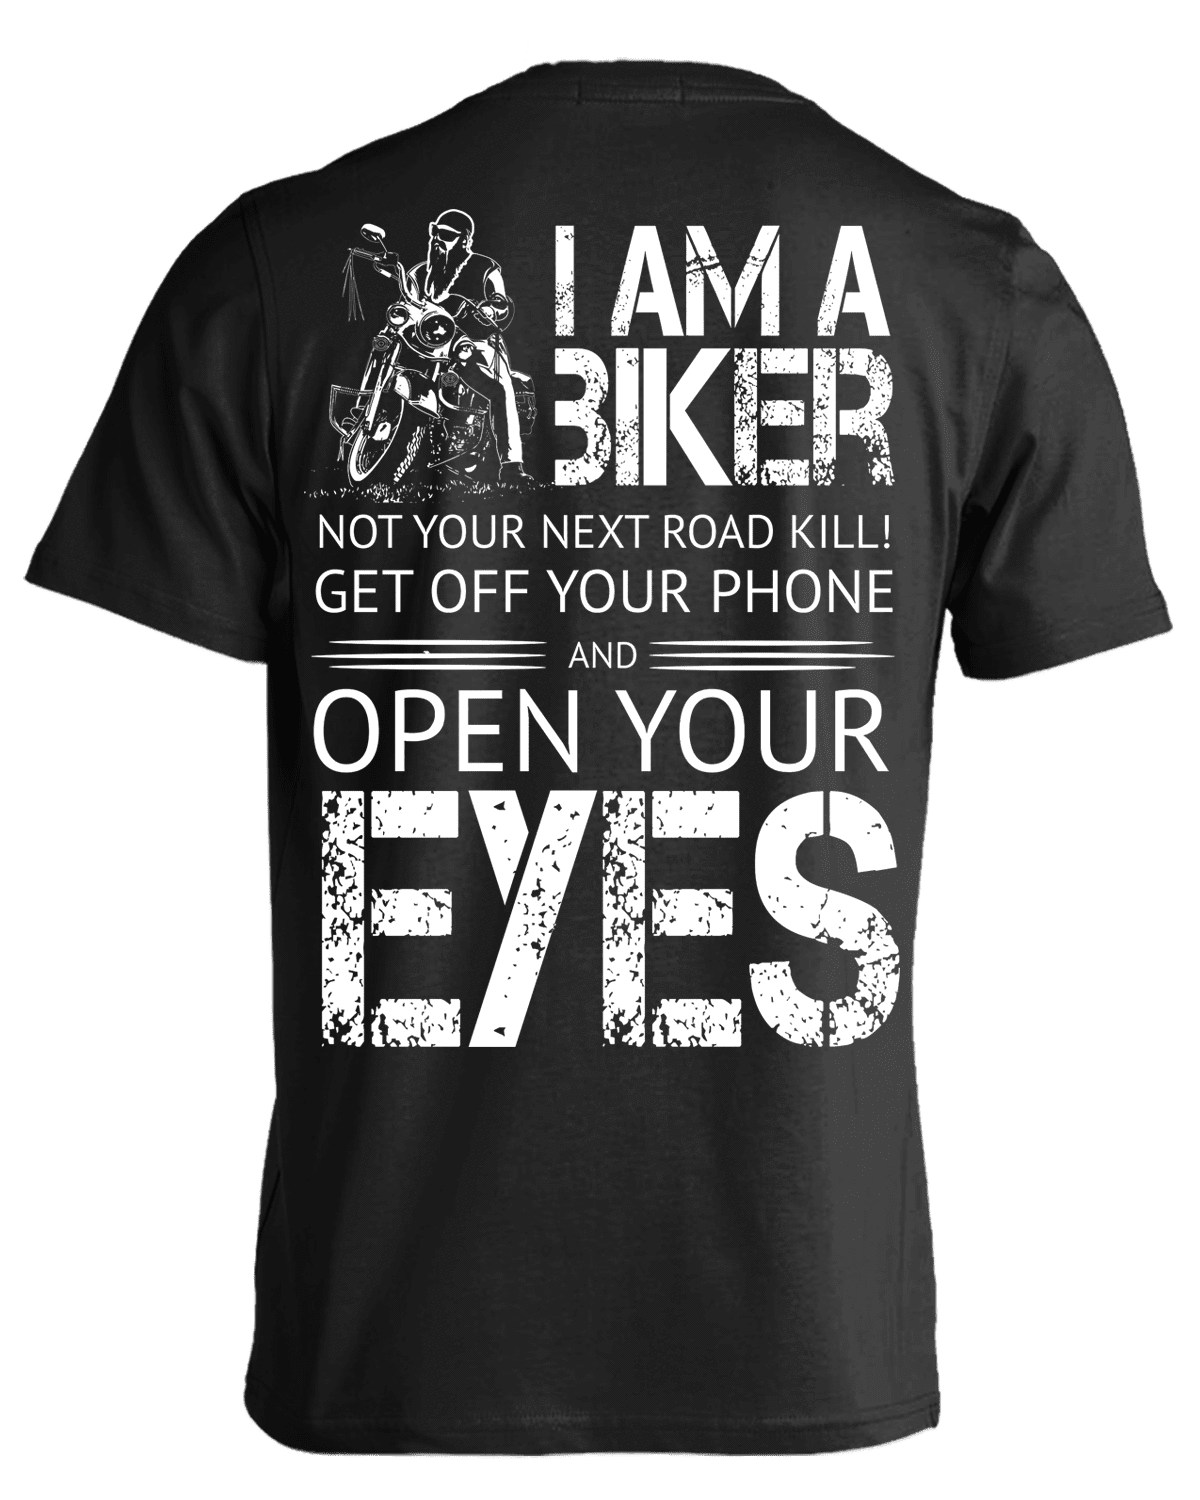 I Am A Biker T-shirt Short Sleeves, Cotton, Black - American Legend Rider